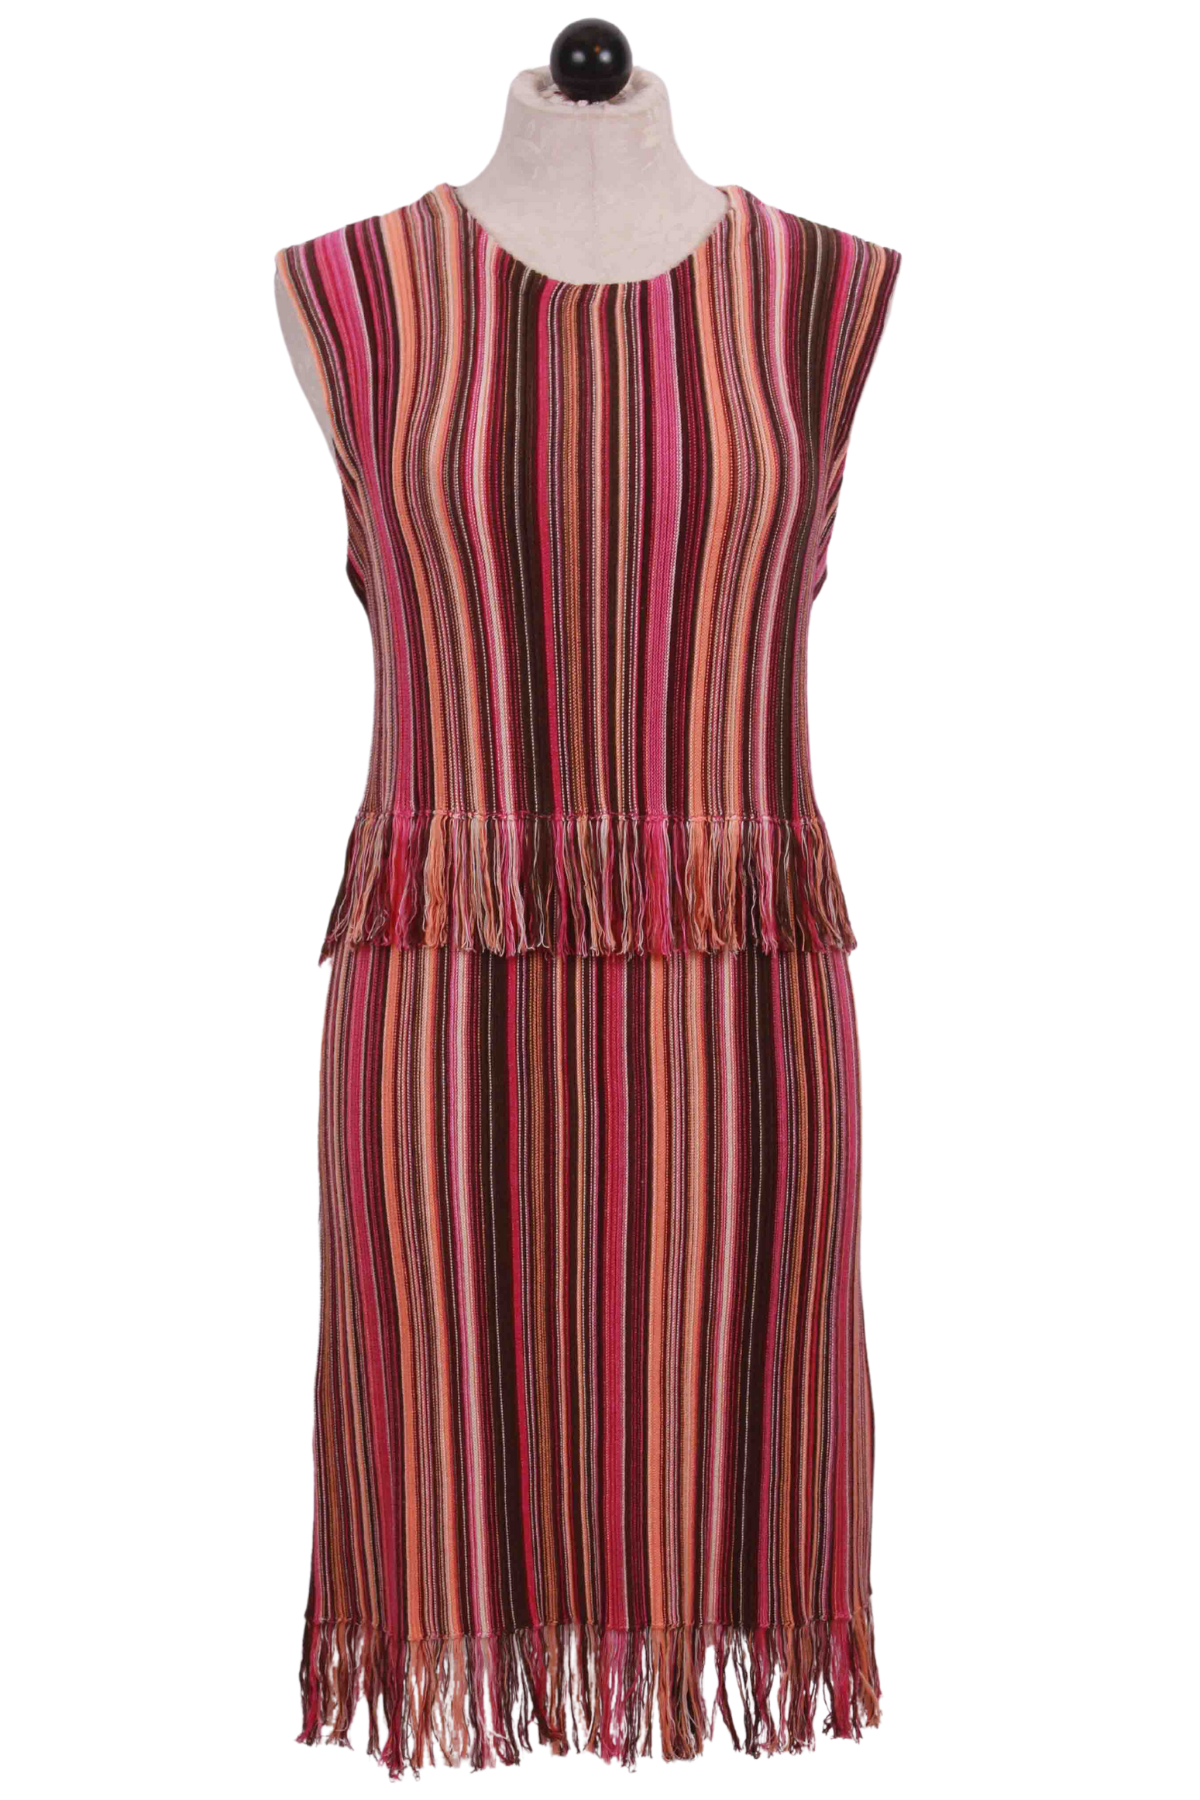 Meadow stripe Kenyon Dress by Marie Oliver